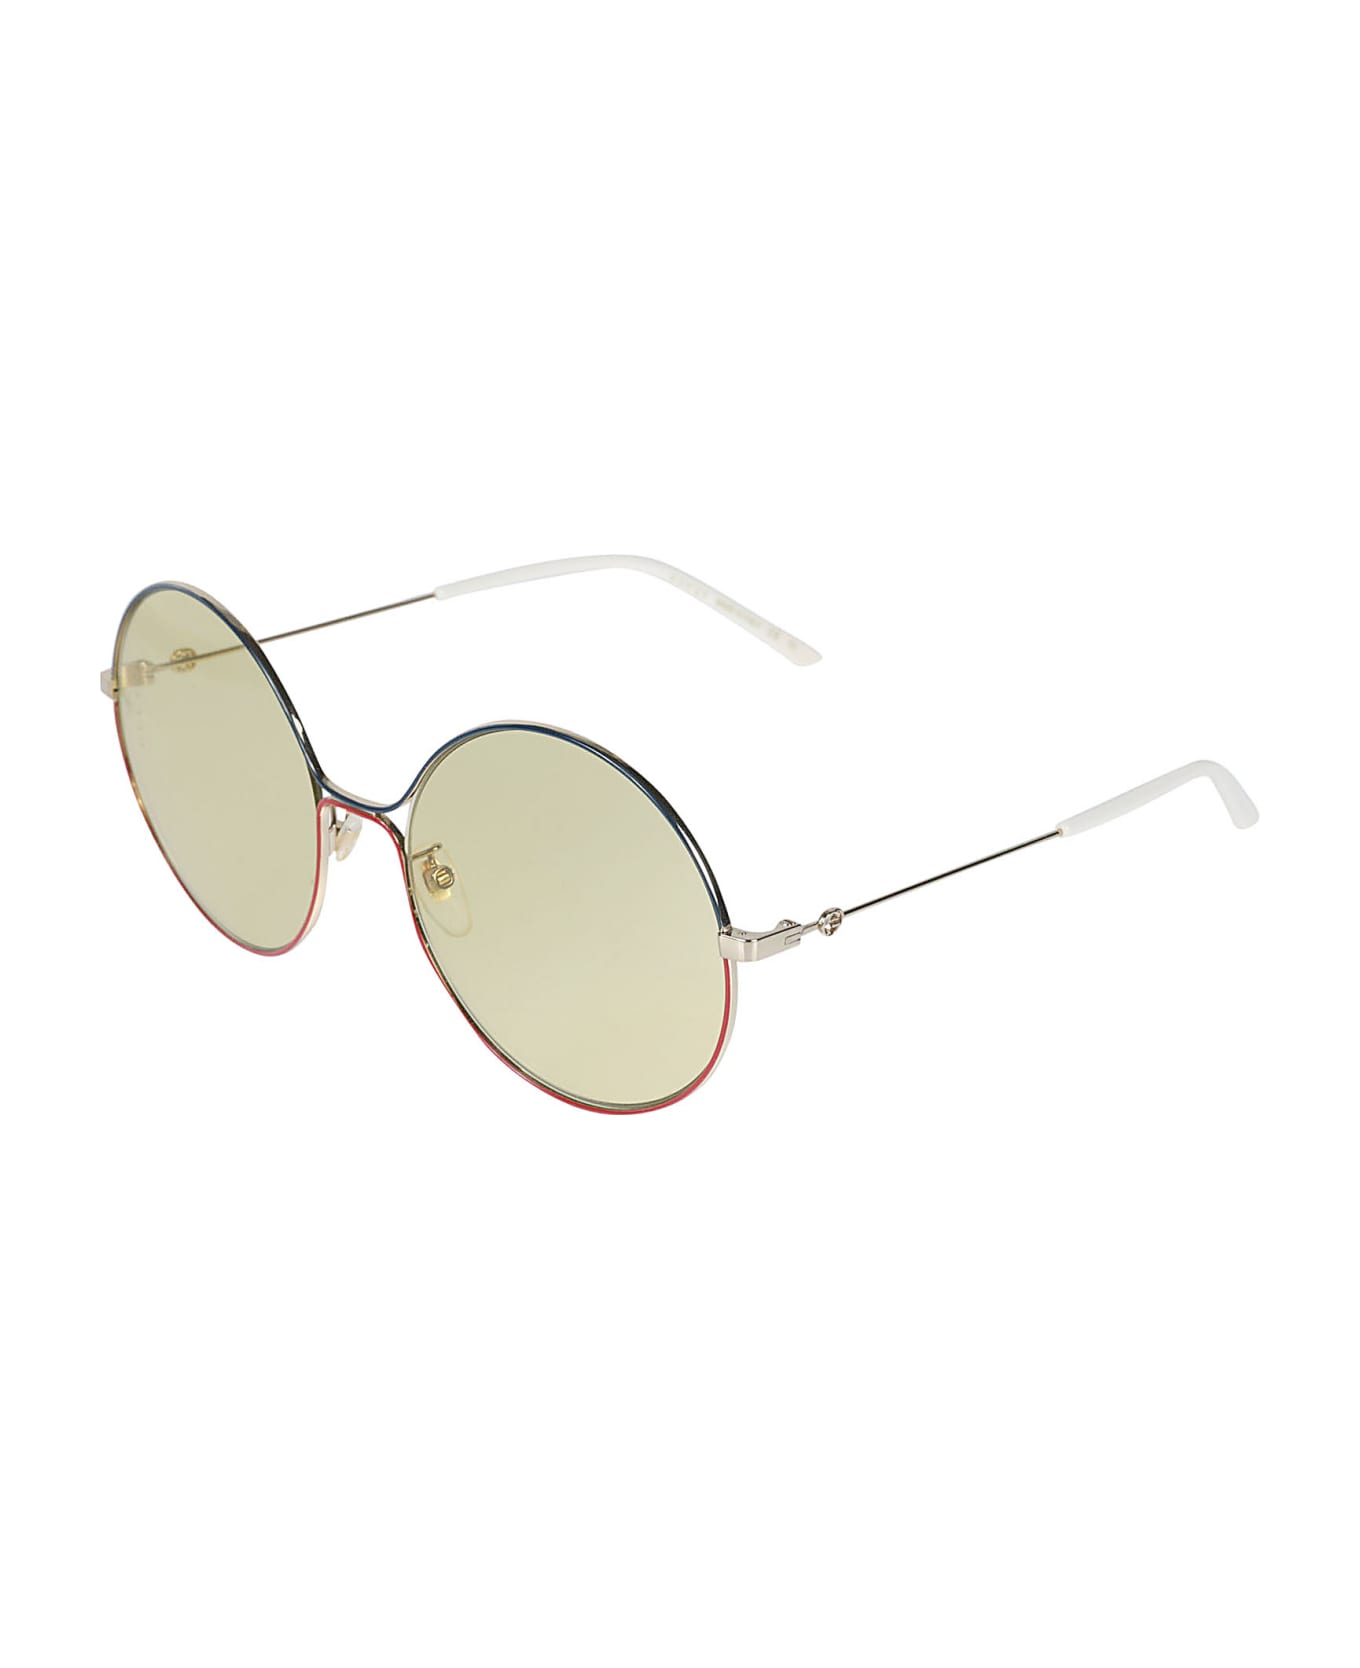 Gucci Eyewear Classic Round Sunglasses - Gold サングラス